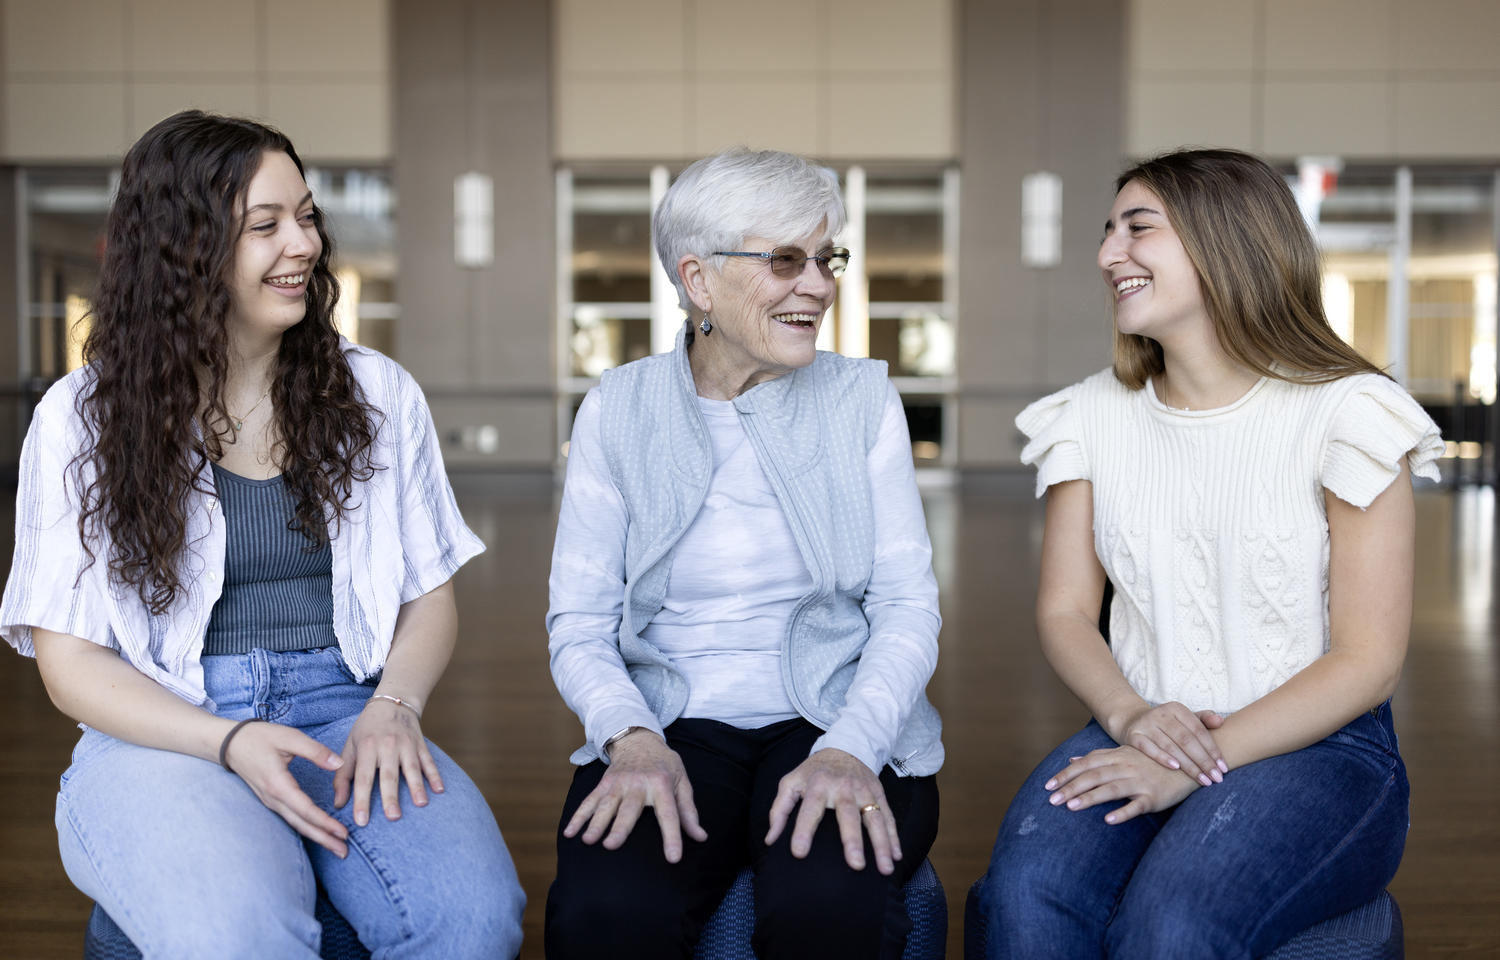 Two female graduating seniors talk with a female former professor.